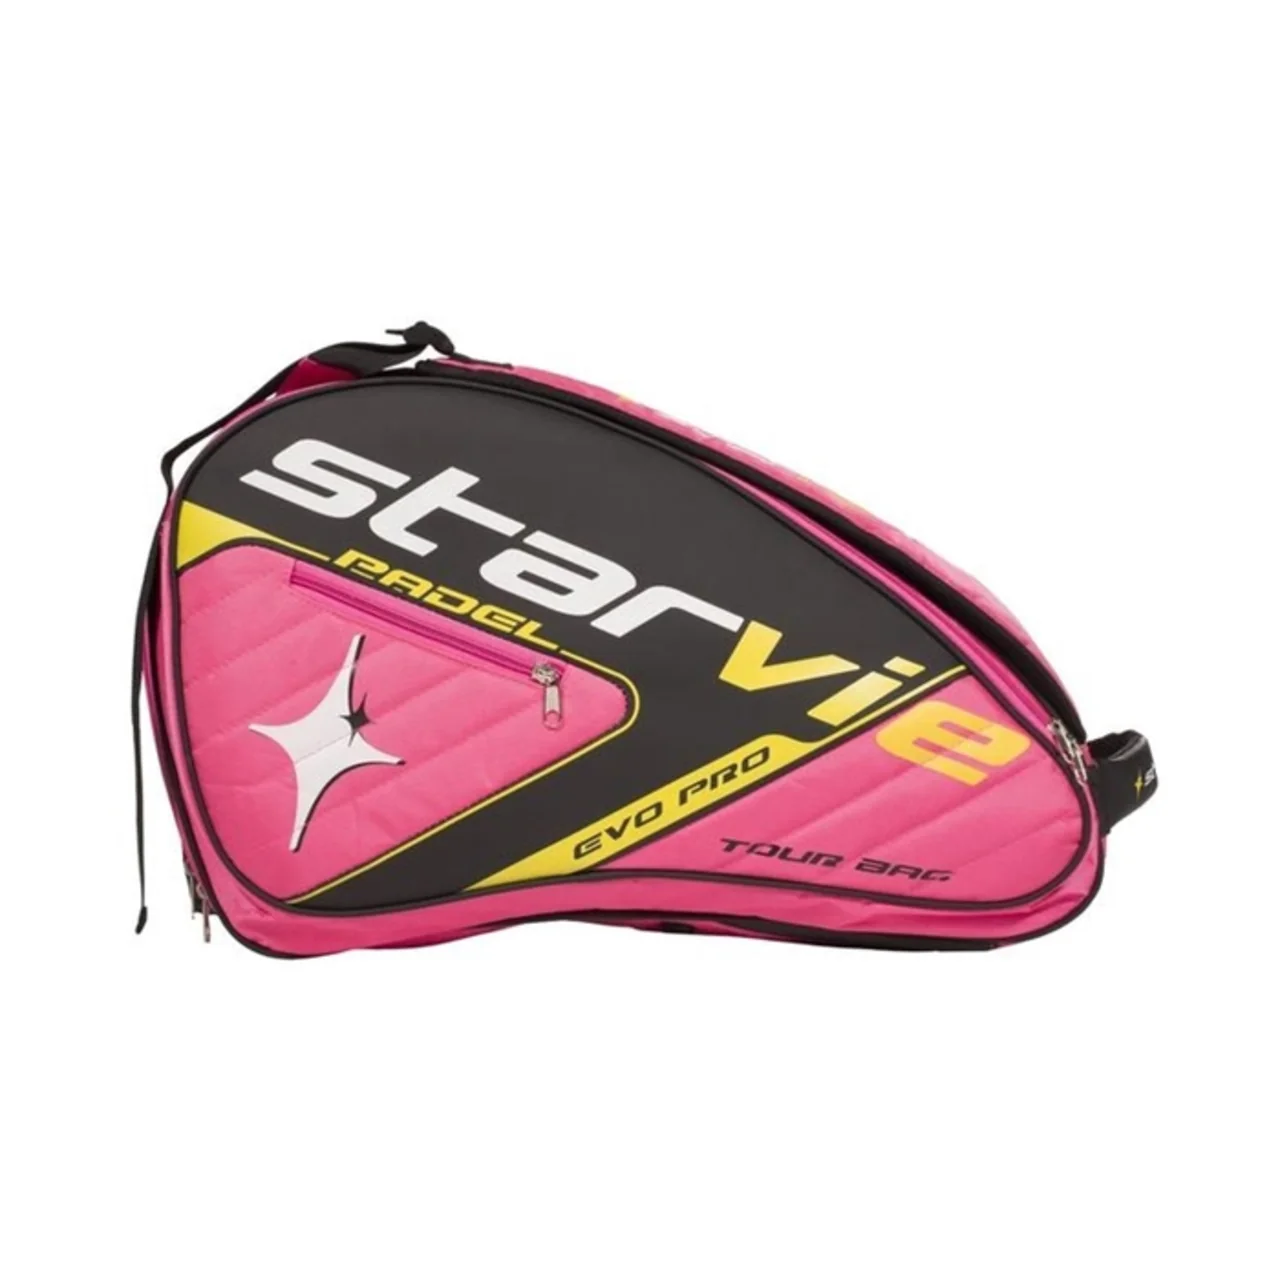 StarVie Pro Bag Pink